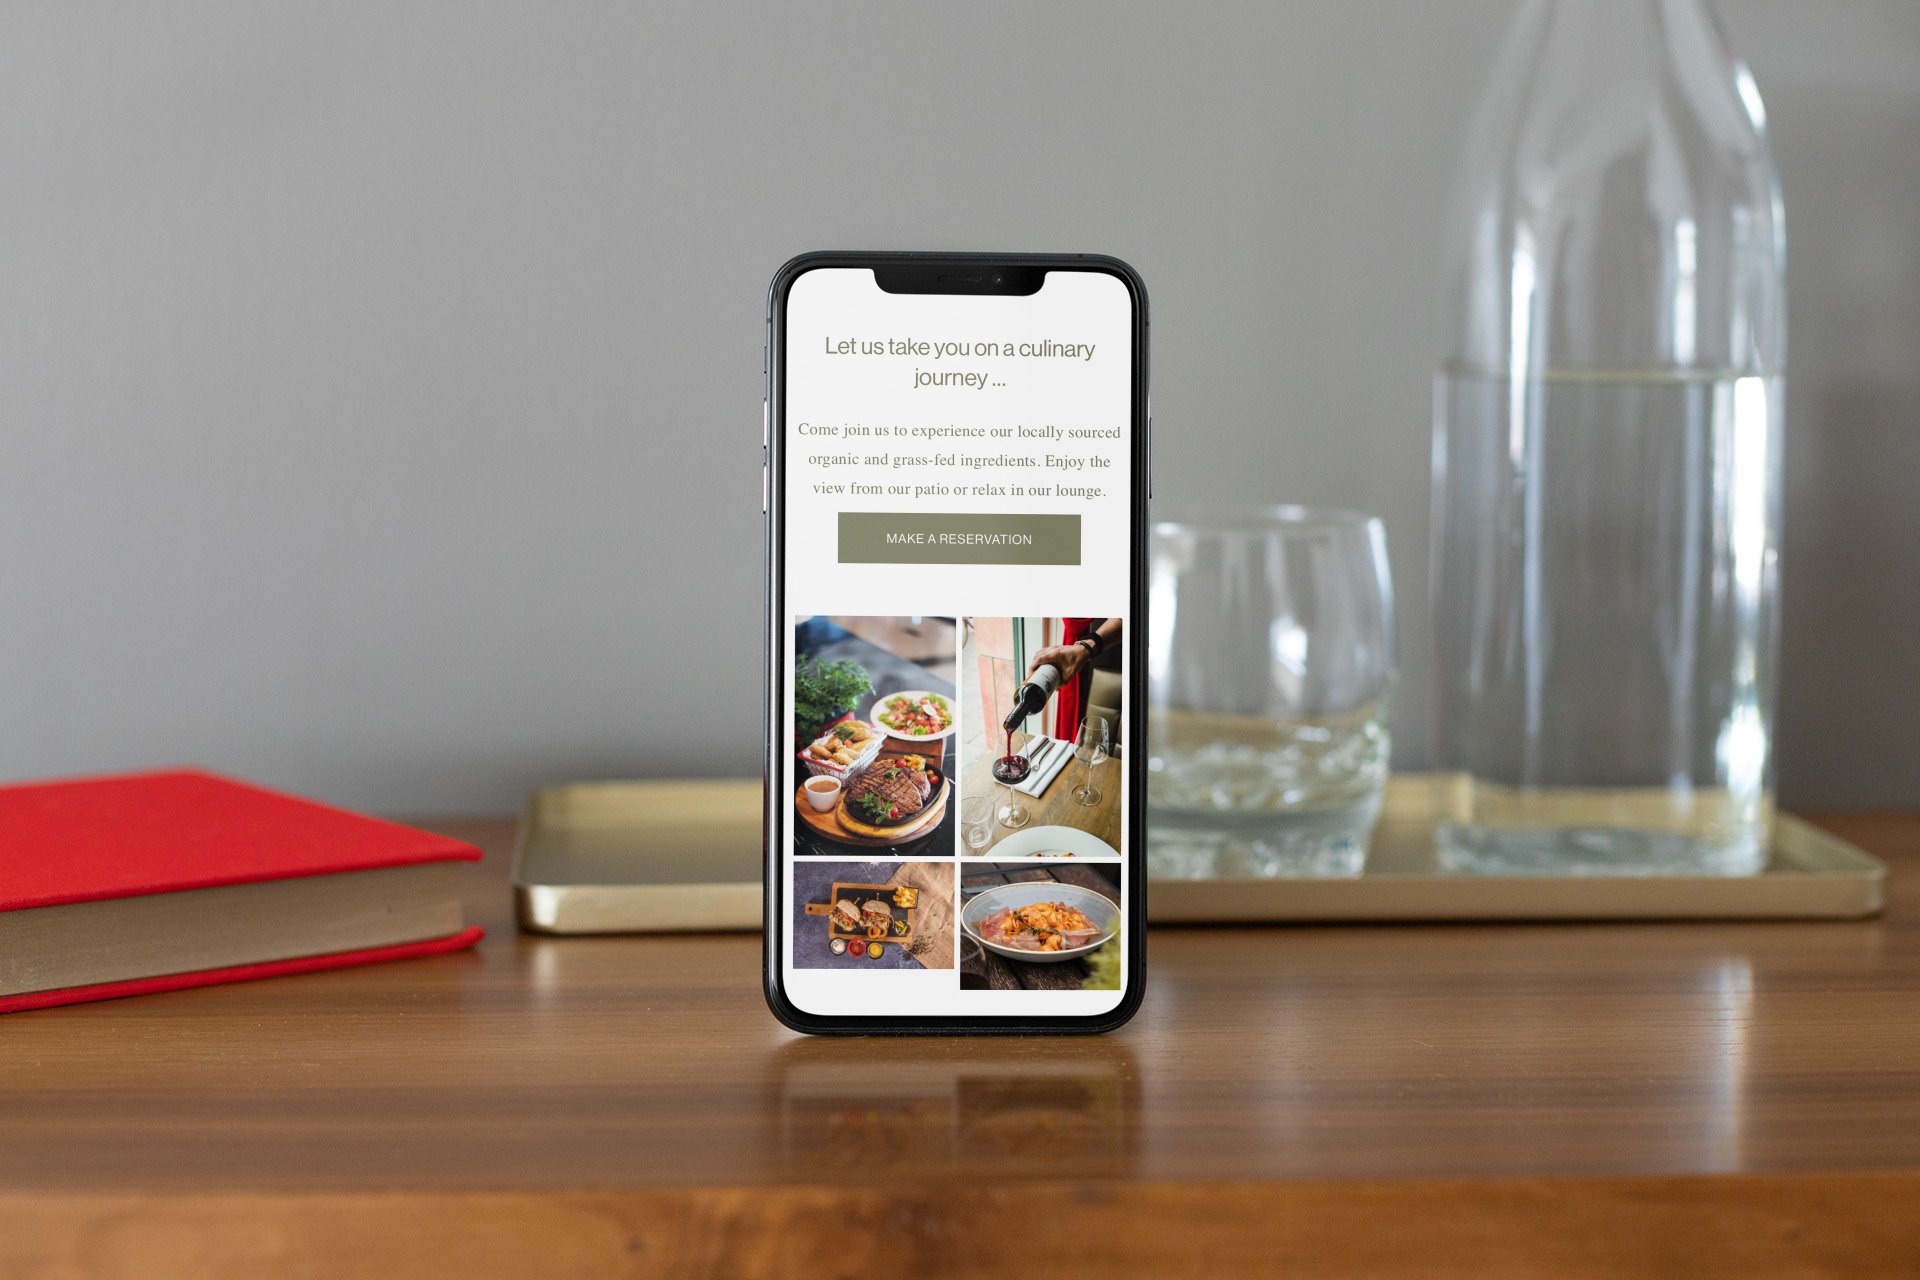 iphone-showing-restaurant-website-standing-next-to-glass.jpg